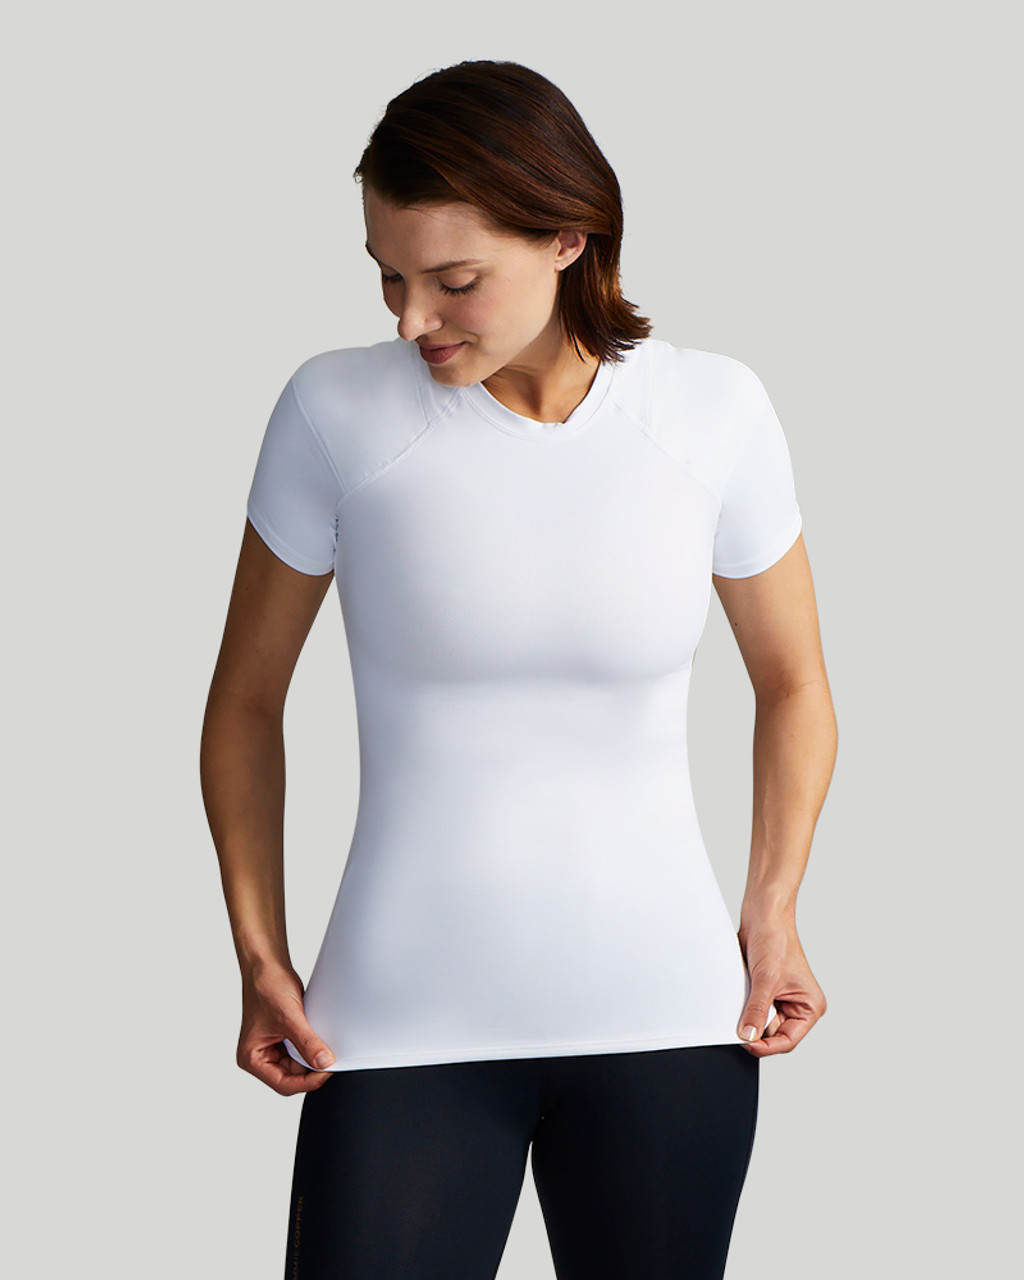 Pro-Grade Tommie Copper L/S Shoulder Support Upper Back Pain Brace  Shirt-White